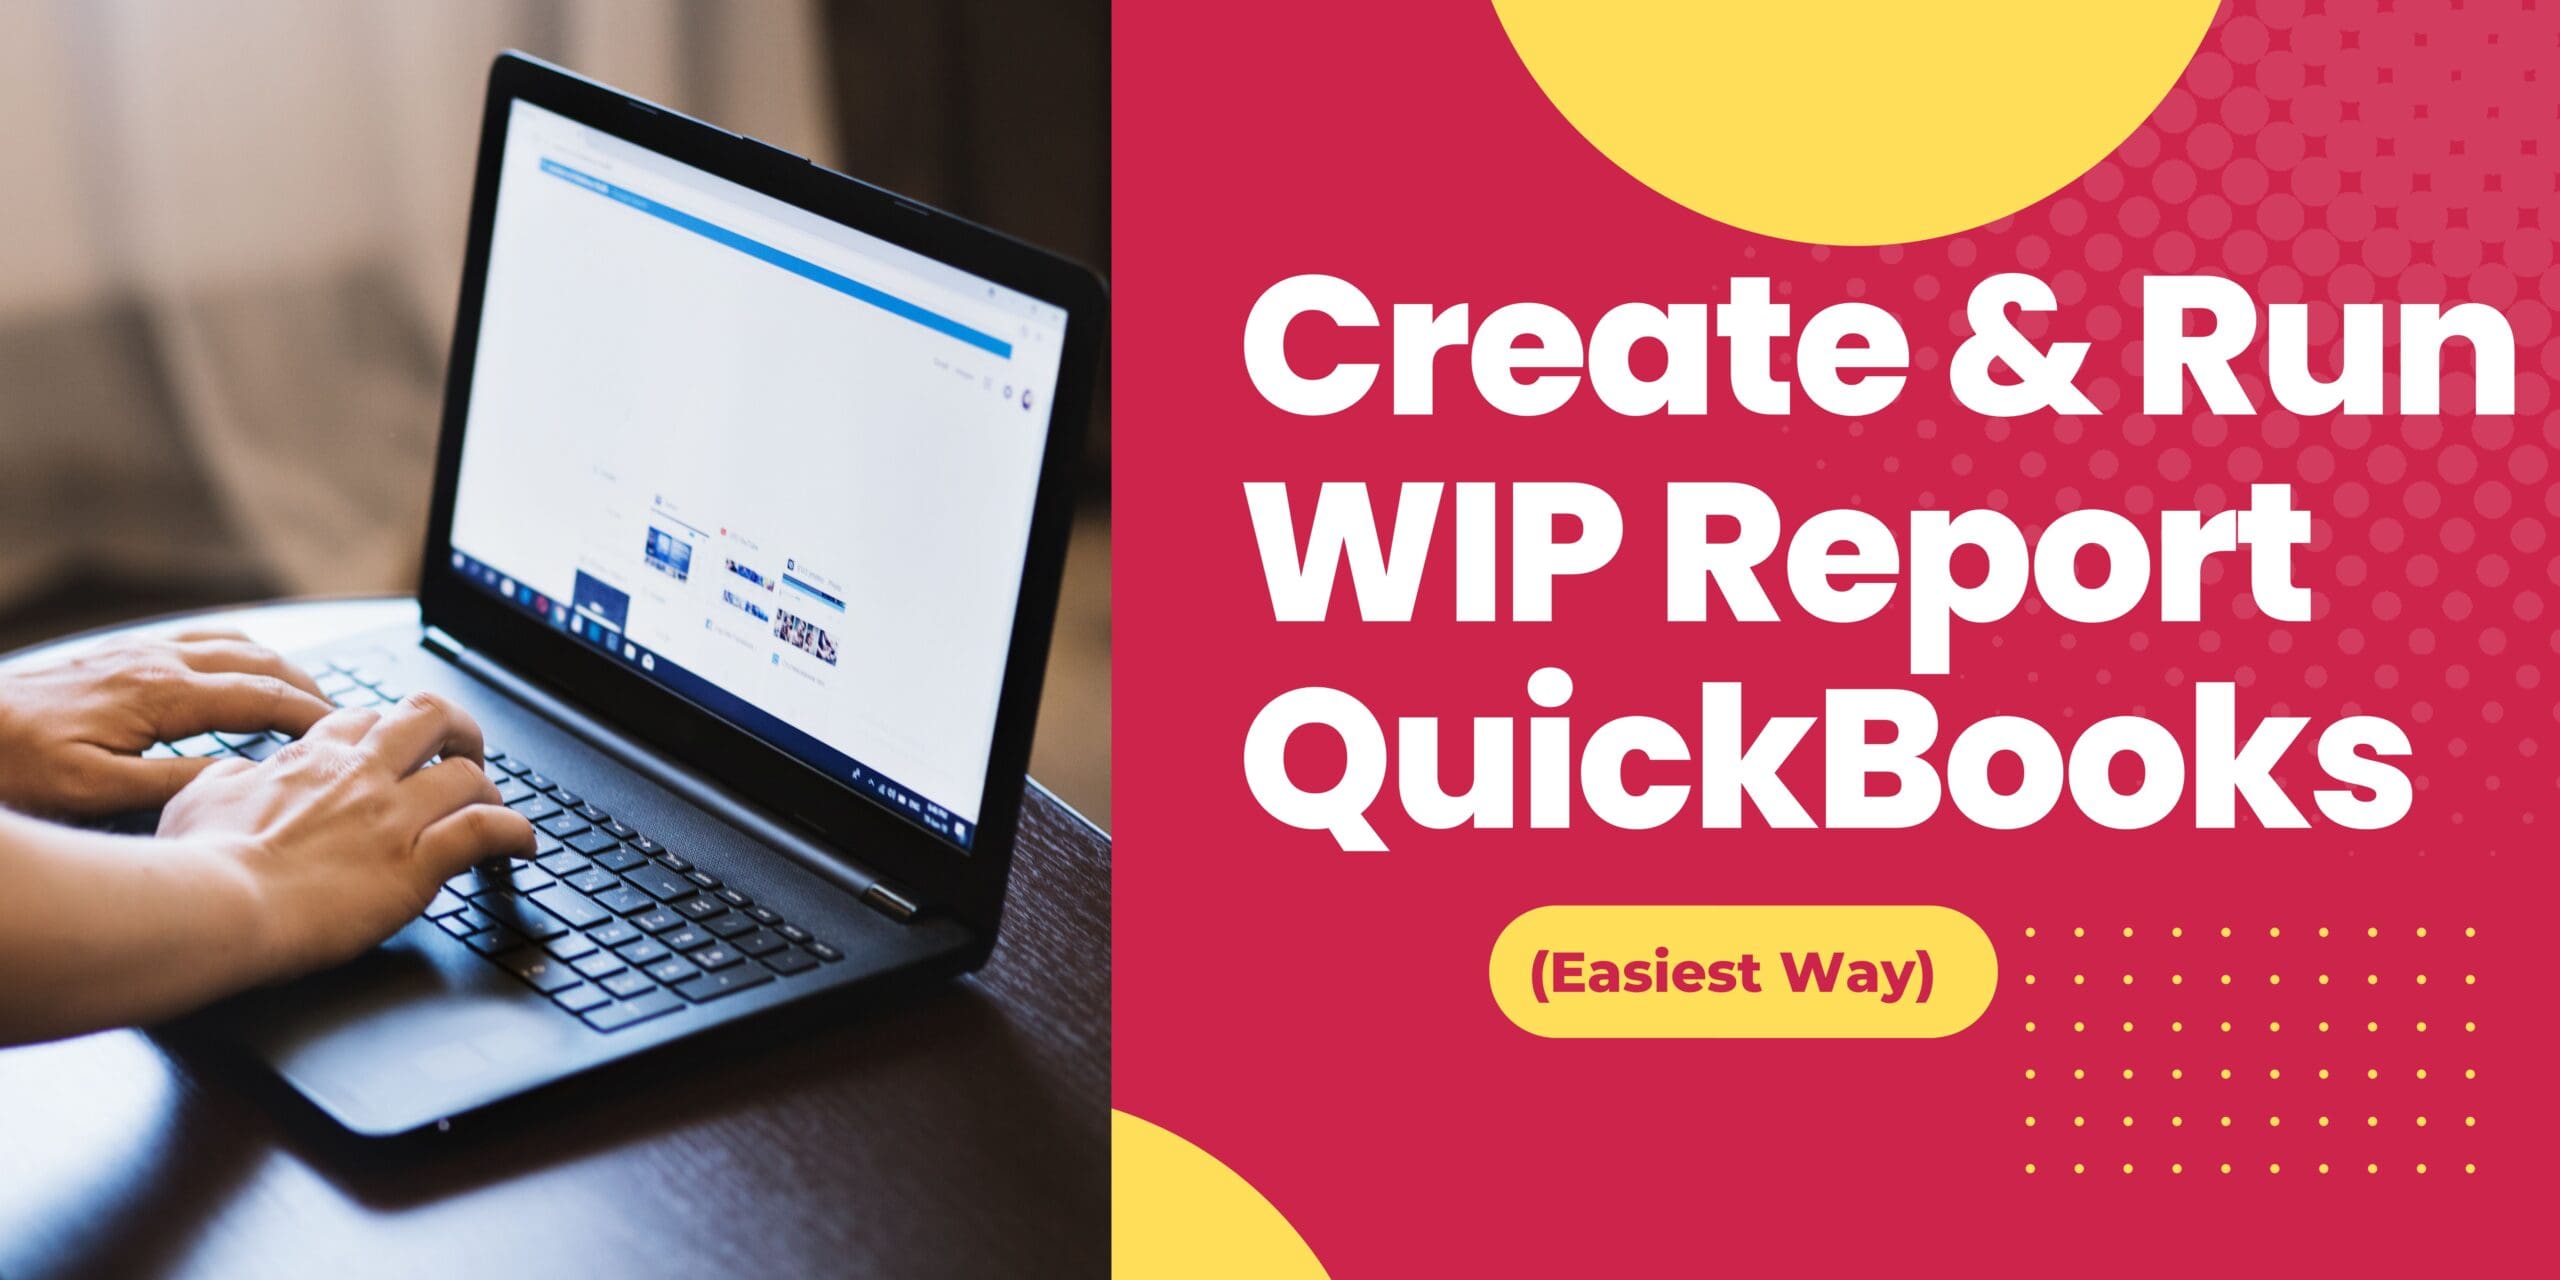 Steps To Create & Run WIP Report QuickBooks